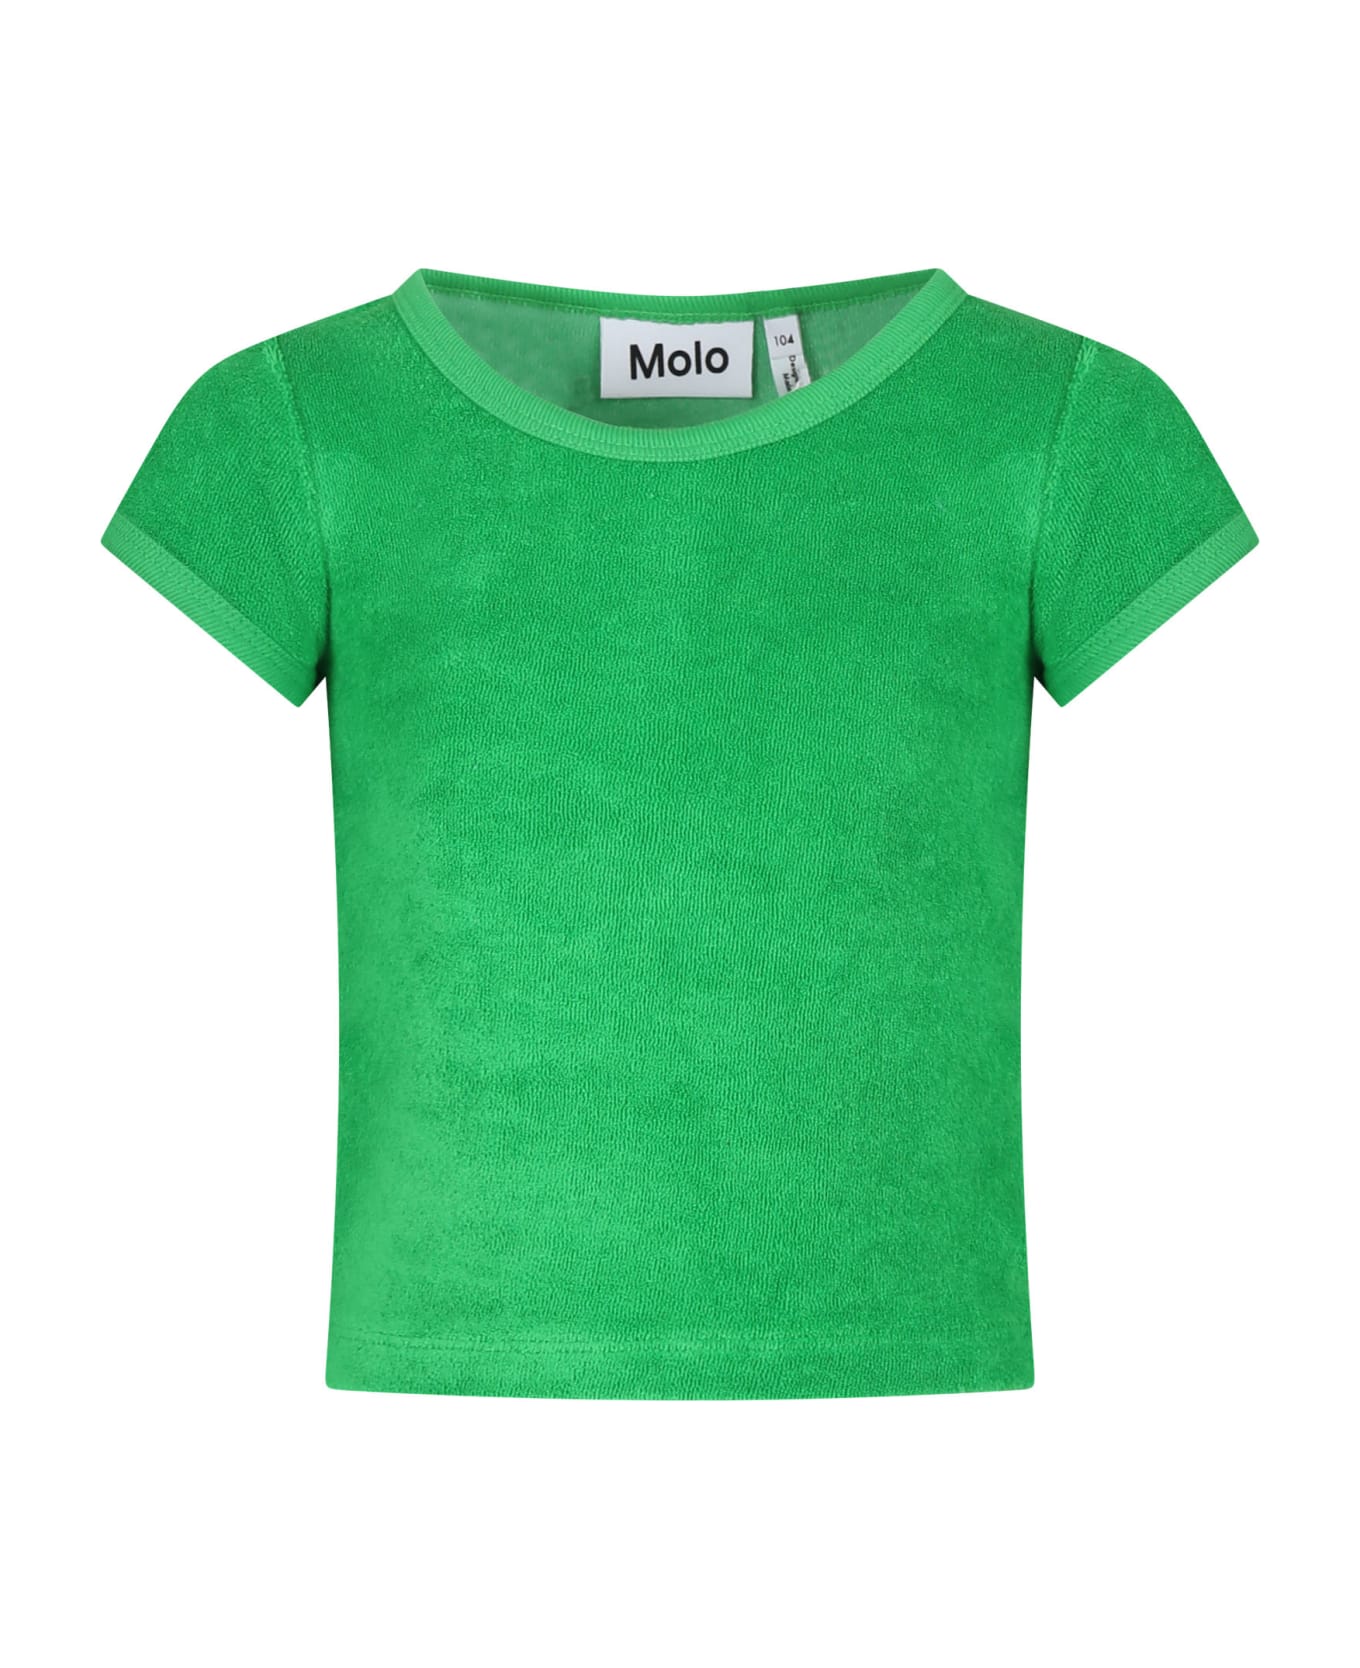 Molo Green T-shirt For Girl - Green